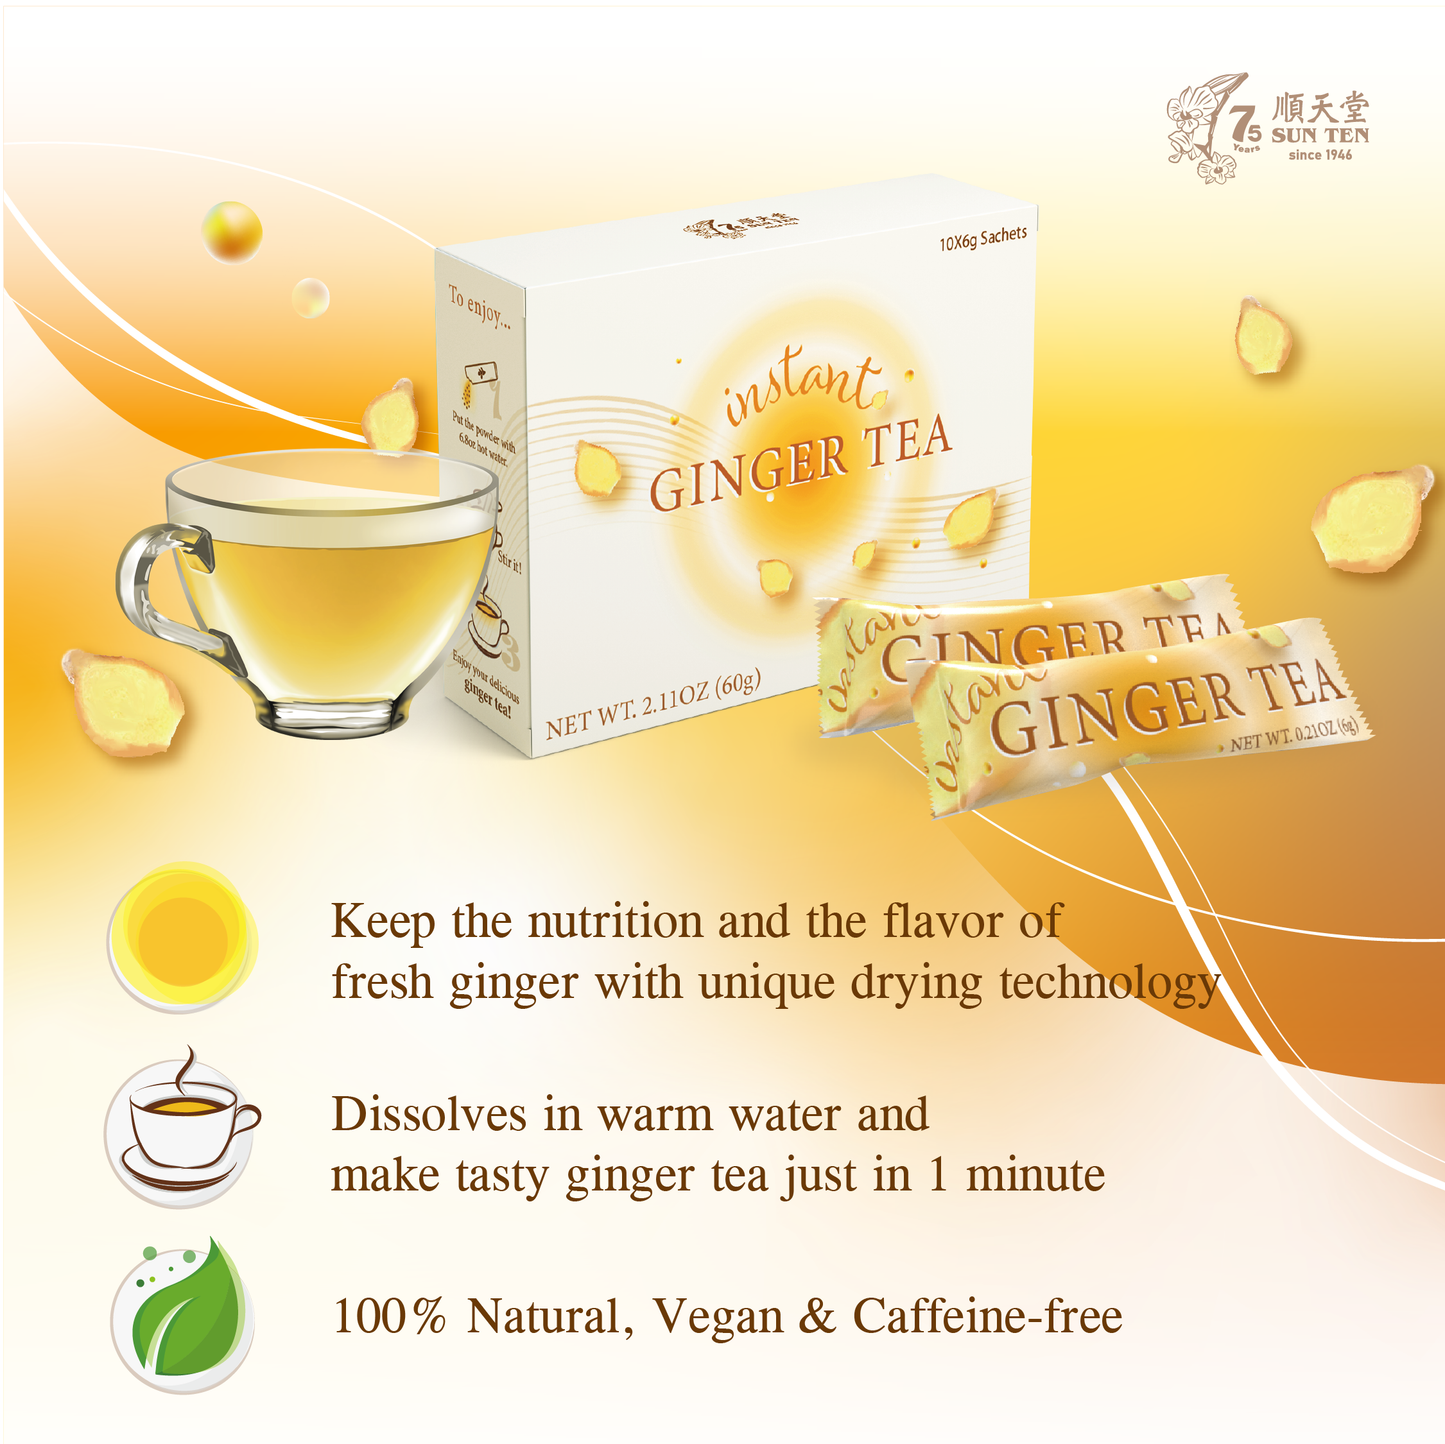 Sun Ten Instant Ginger Tea 暖心即溶生薑茶 (10 sachets/box)